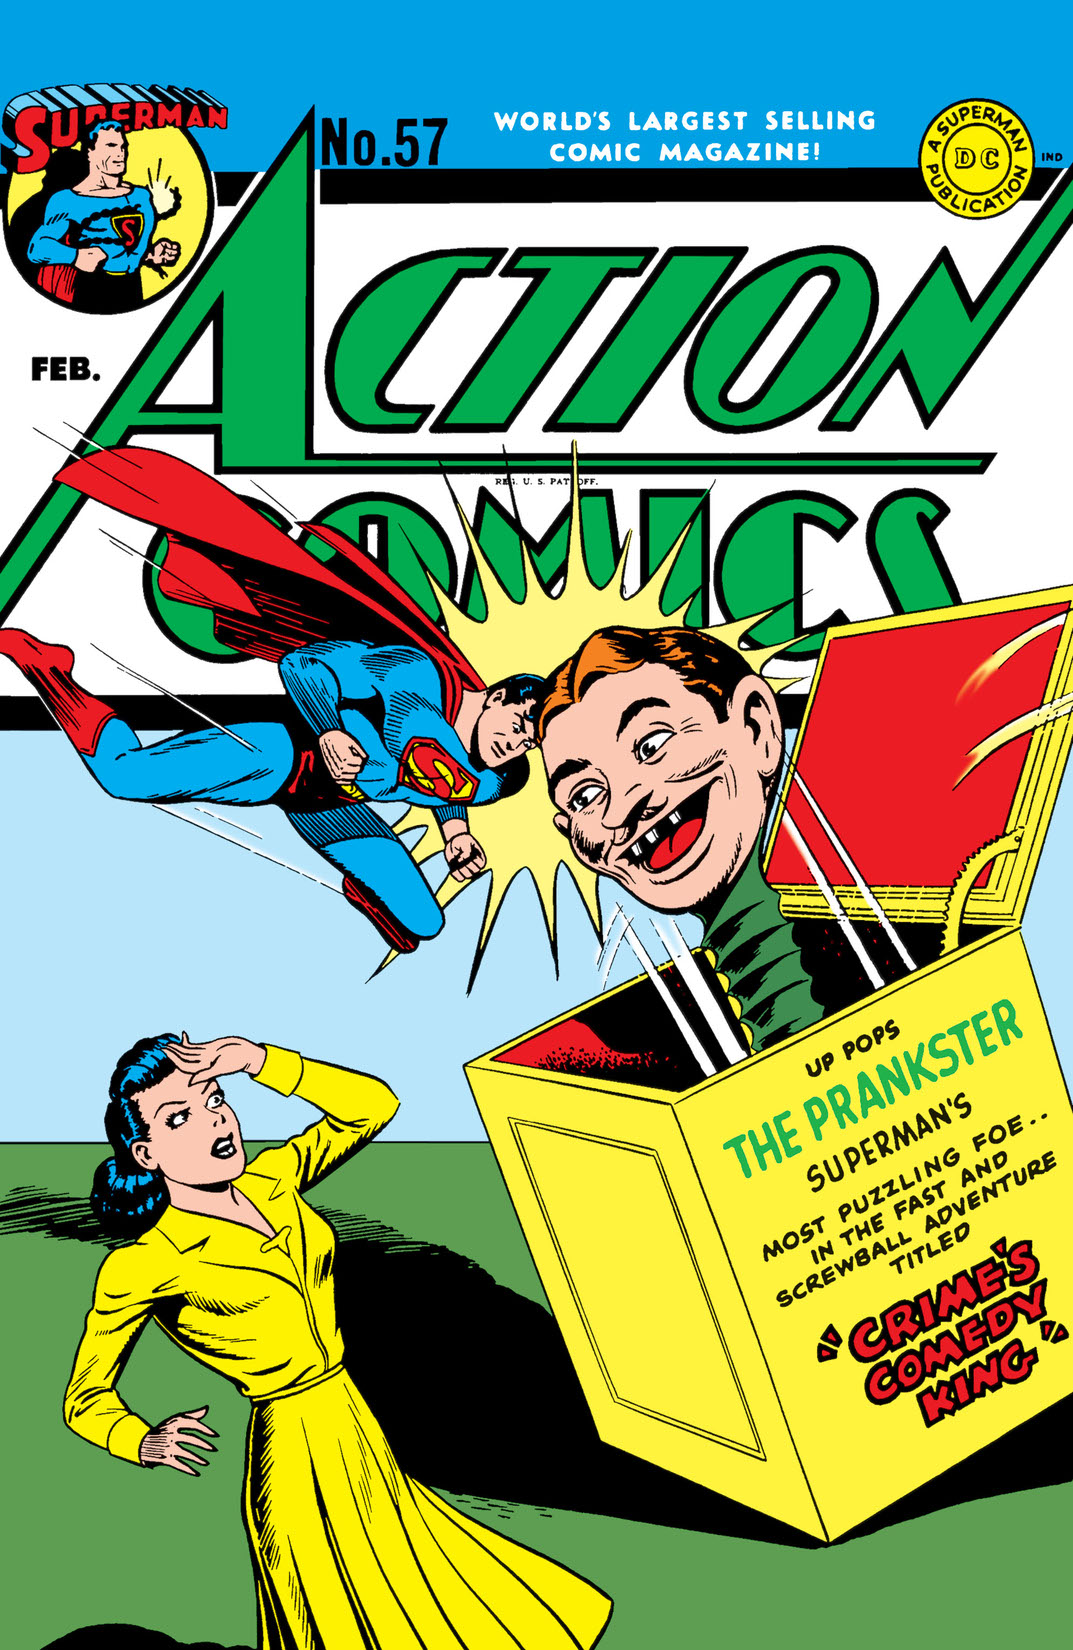 Action Comics (1938-) #57 preview images